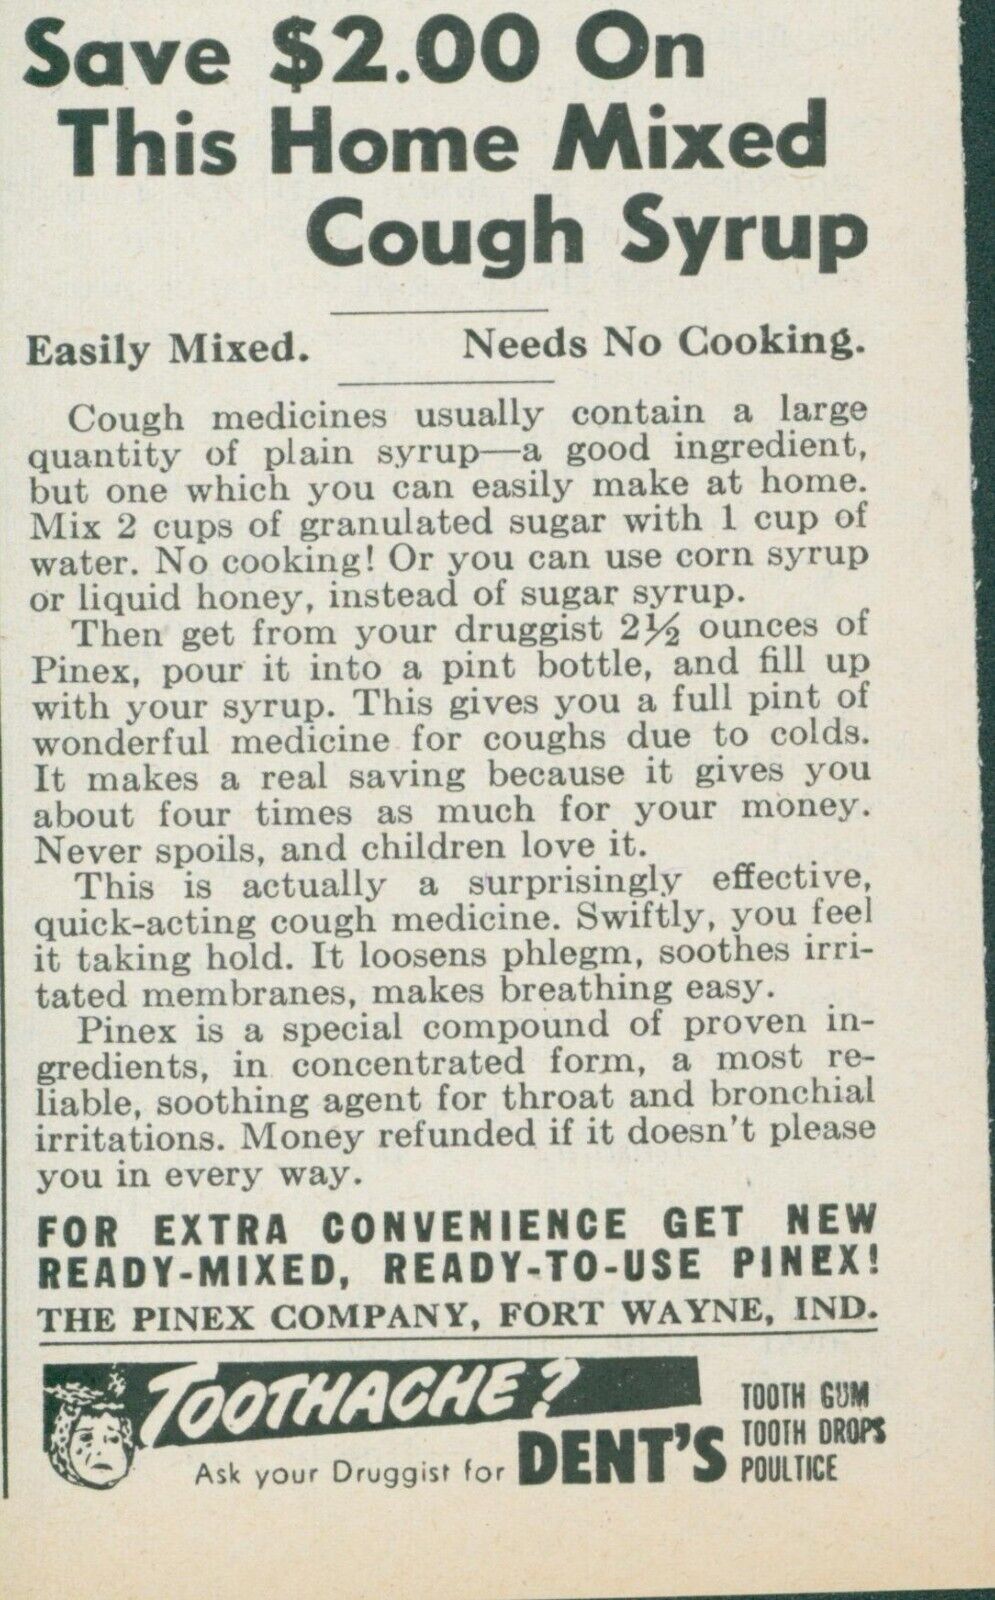 1955 Pinex Home Mixed Cough Syrup Sugar Water Save Money Vintage Print Ad FJ1